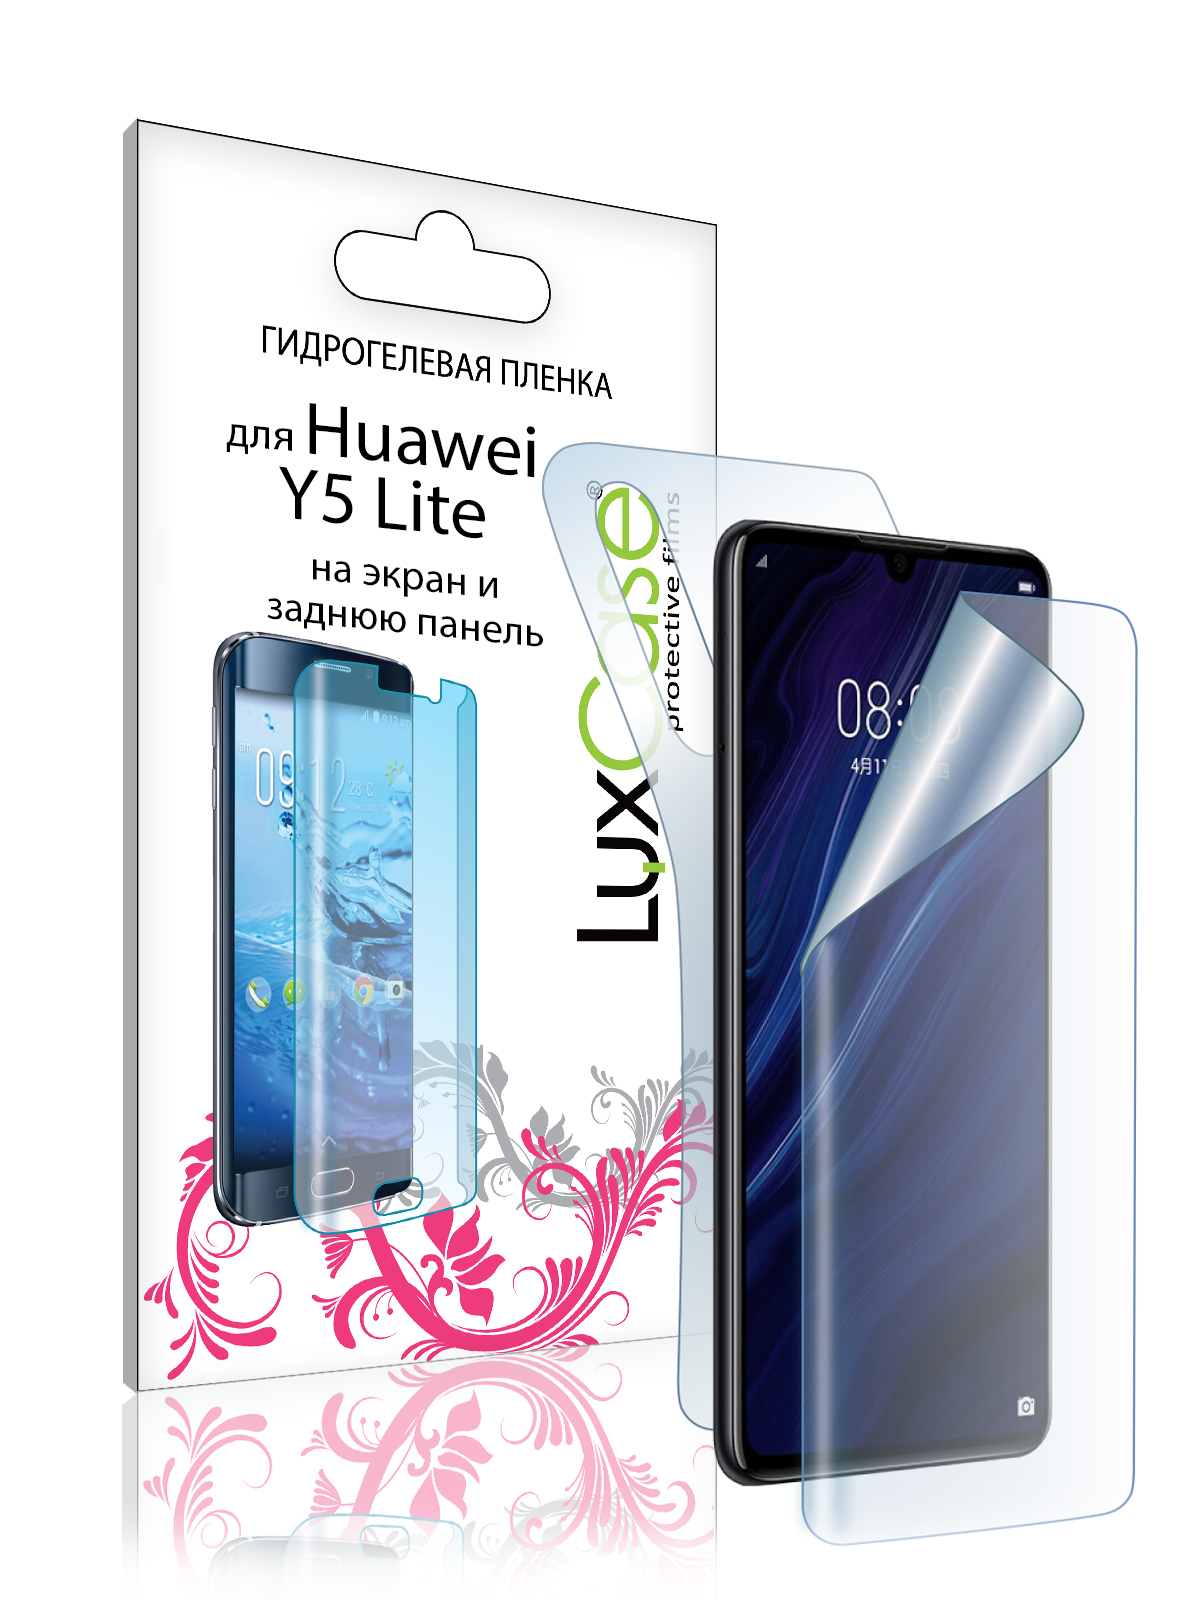 Пленка гидрогелевая LuxCase для Huawei Y5 Lite 0.14mm Front and Back Transperent Huawei Y5 Lite пленка защитная гидрогелевая krutoff для huawei nova lite задняя сторона текстура ромб